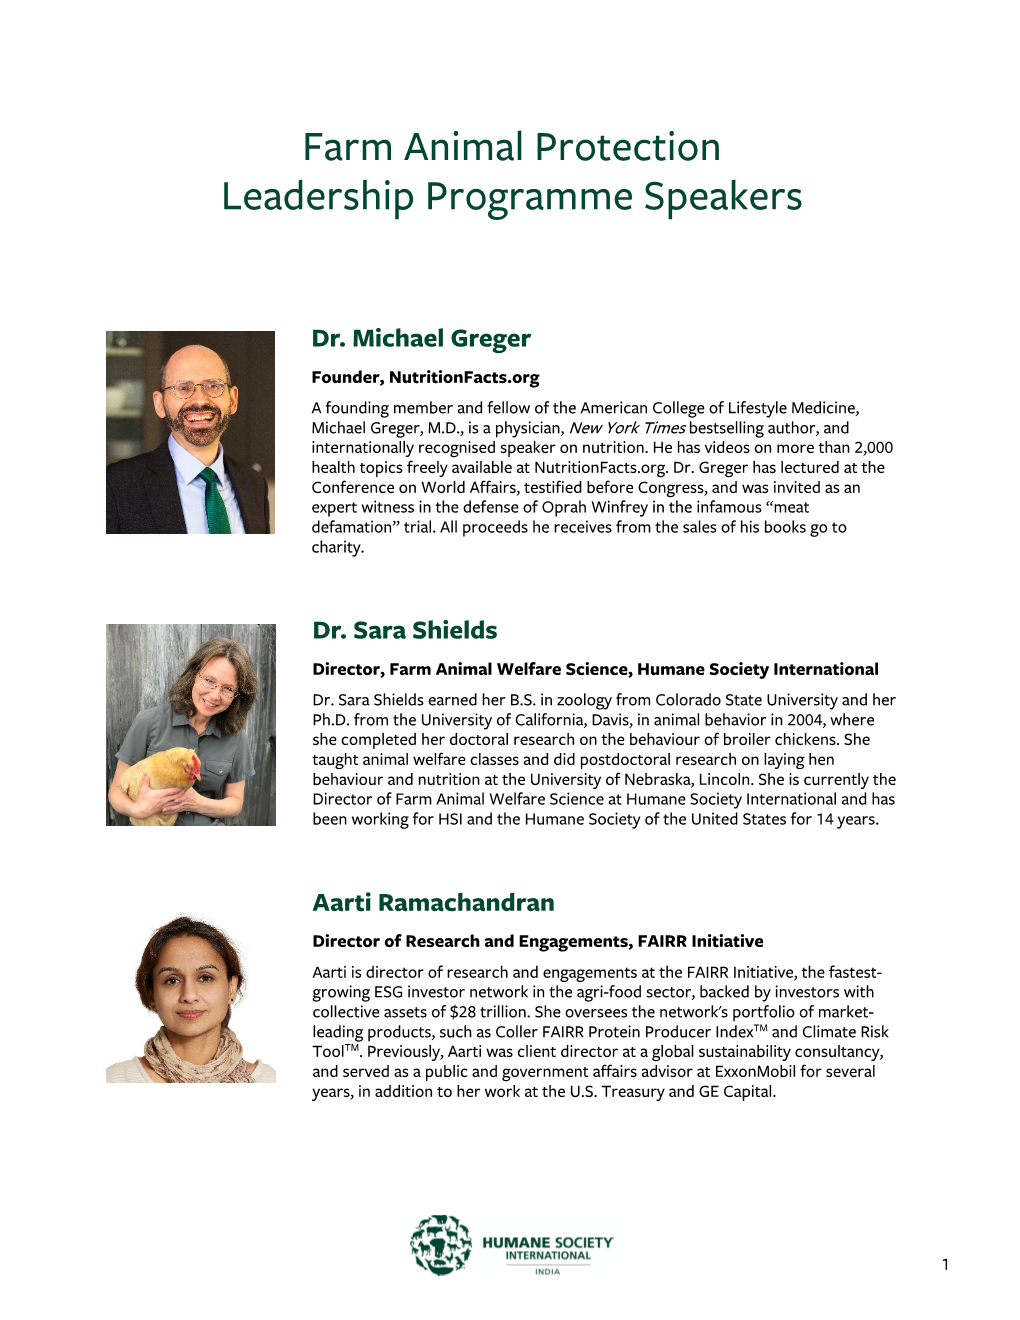 Farm Animal Protection Leadership Programme Speakers